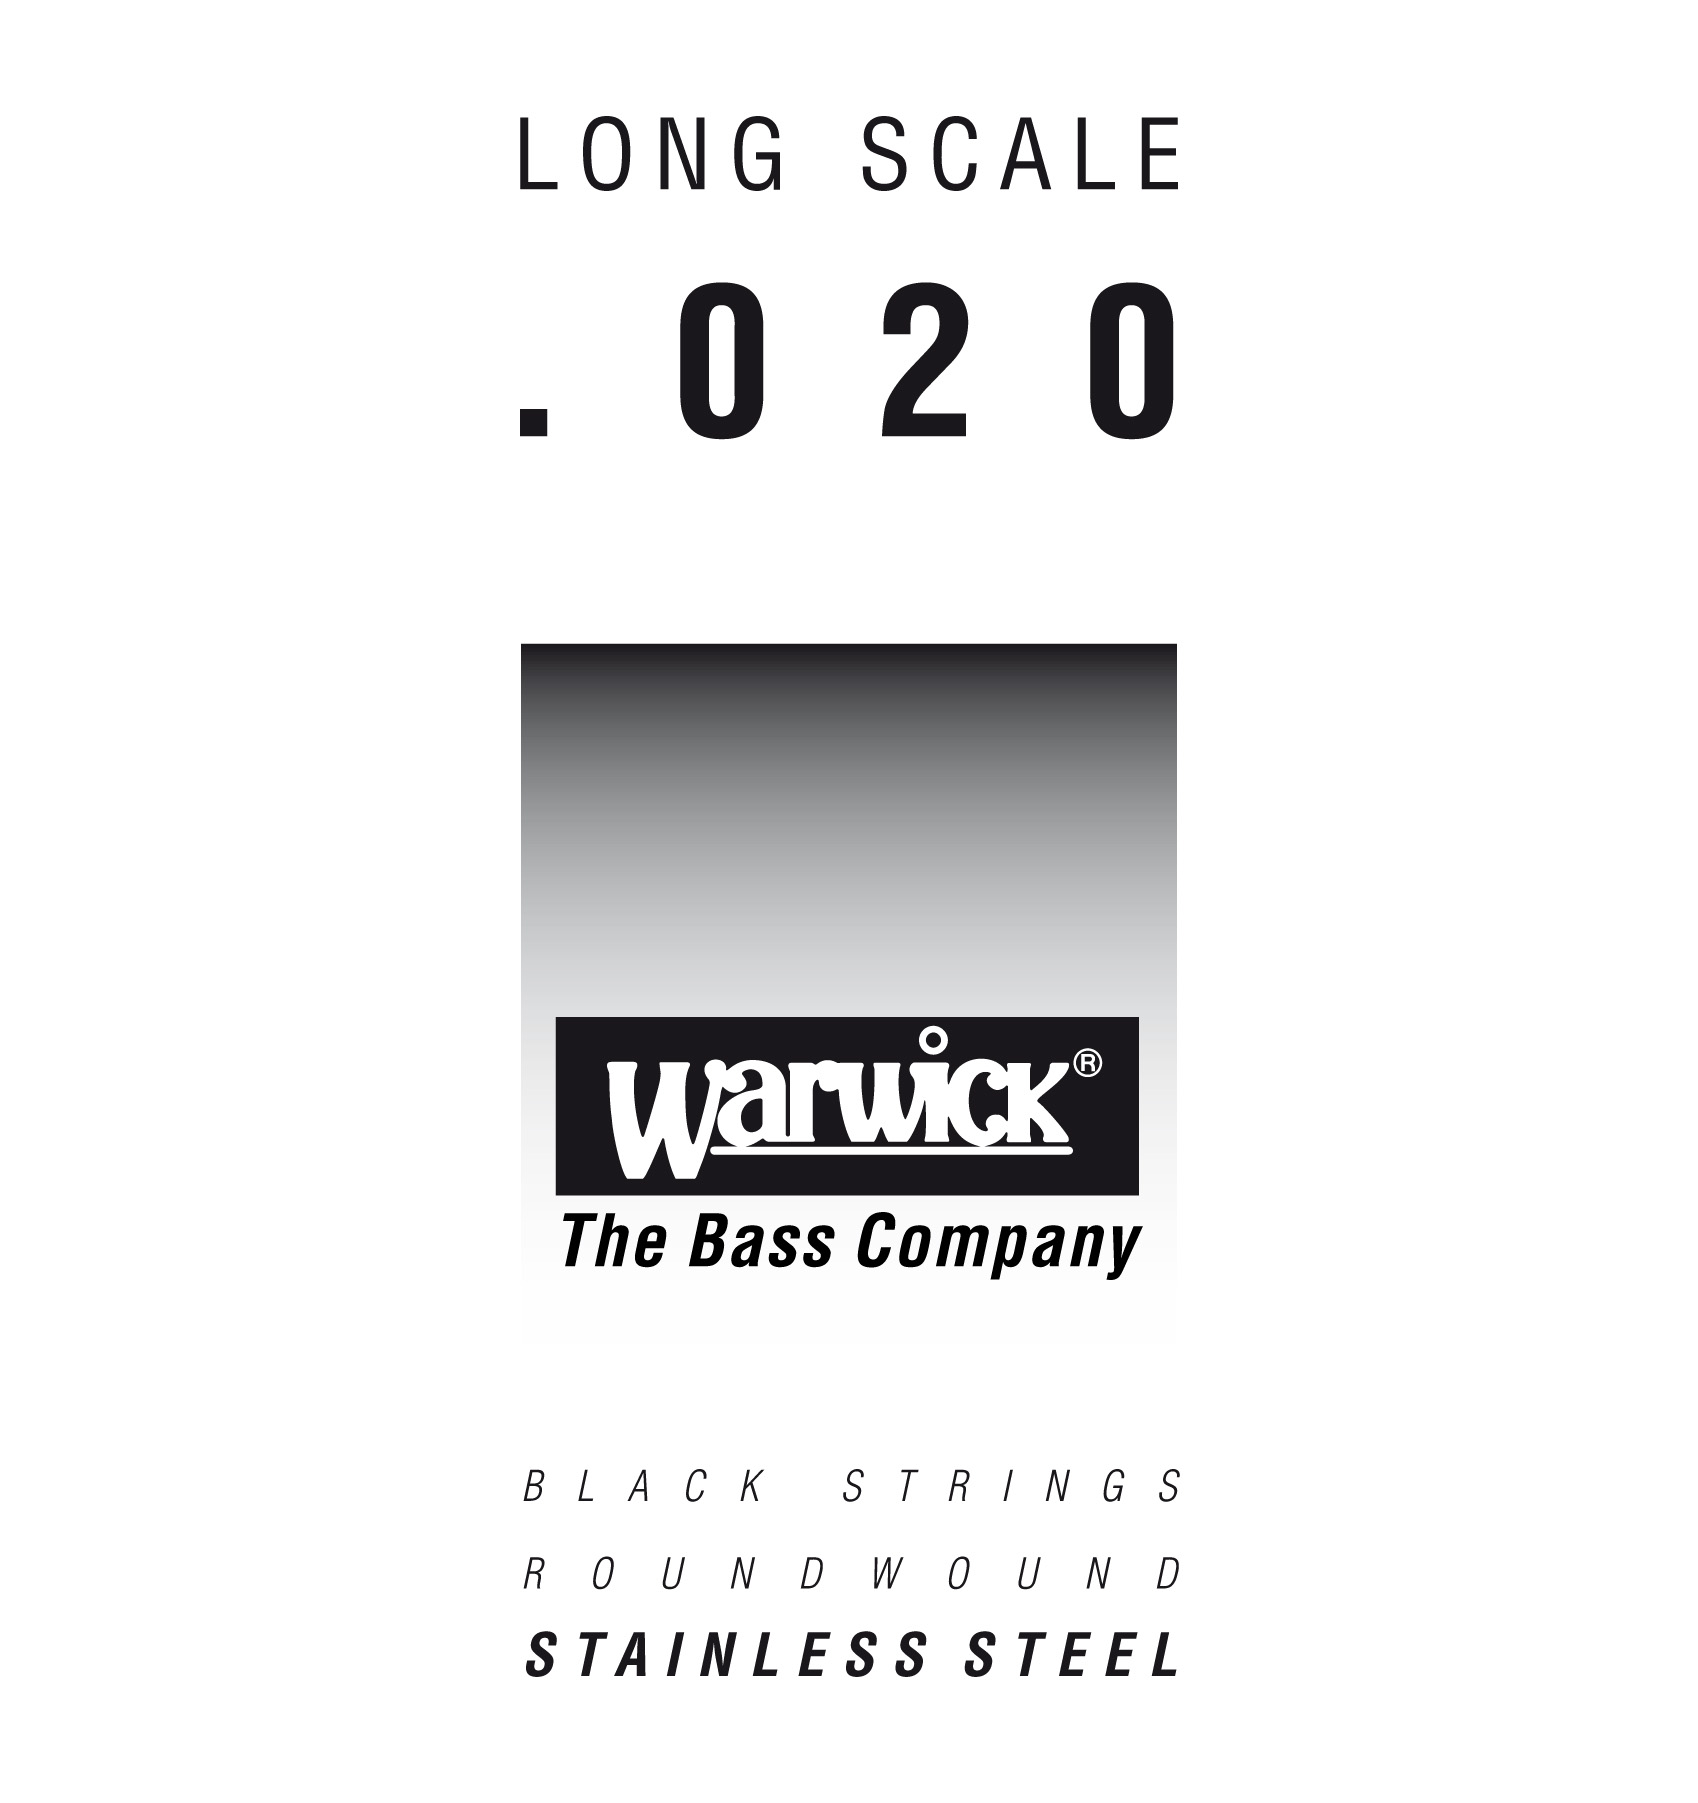 Warwick Black Label Bass Strings, Stainless Steel - Bass Single String, .020", Long Scale